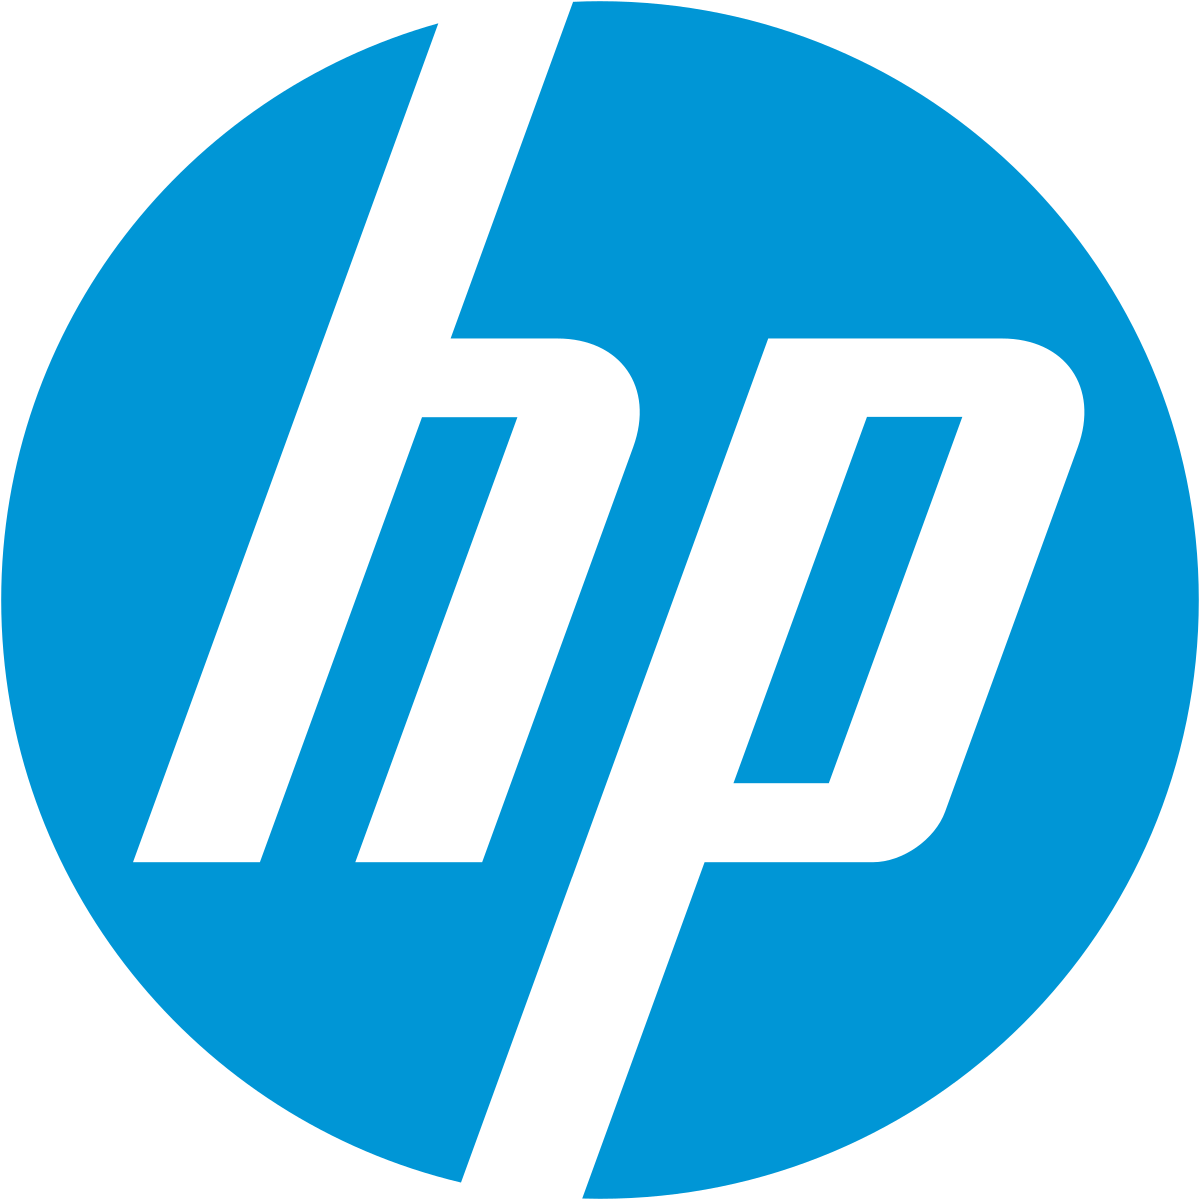 HP Laptop Logo - HP Pavilion (computer)